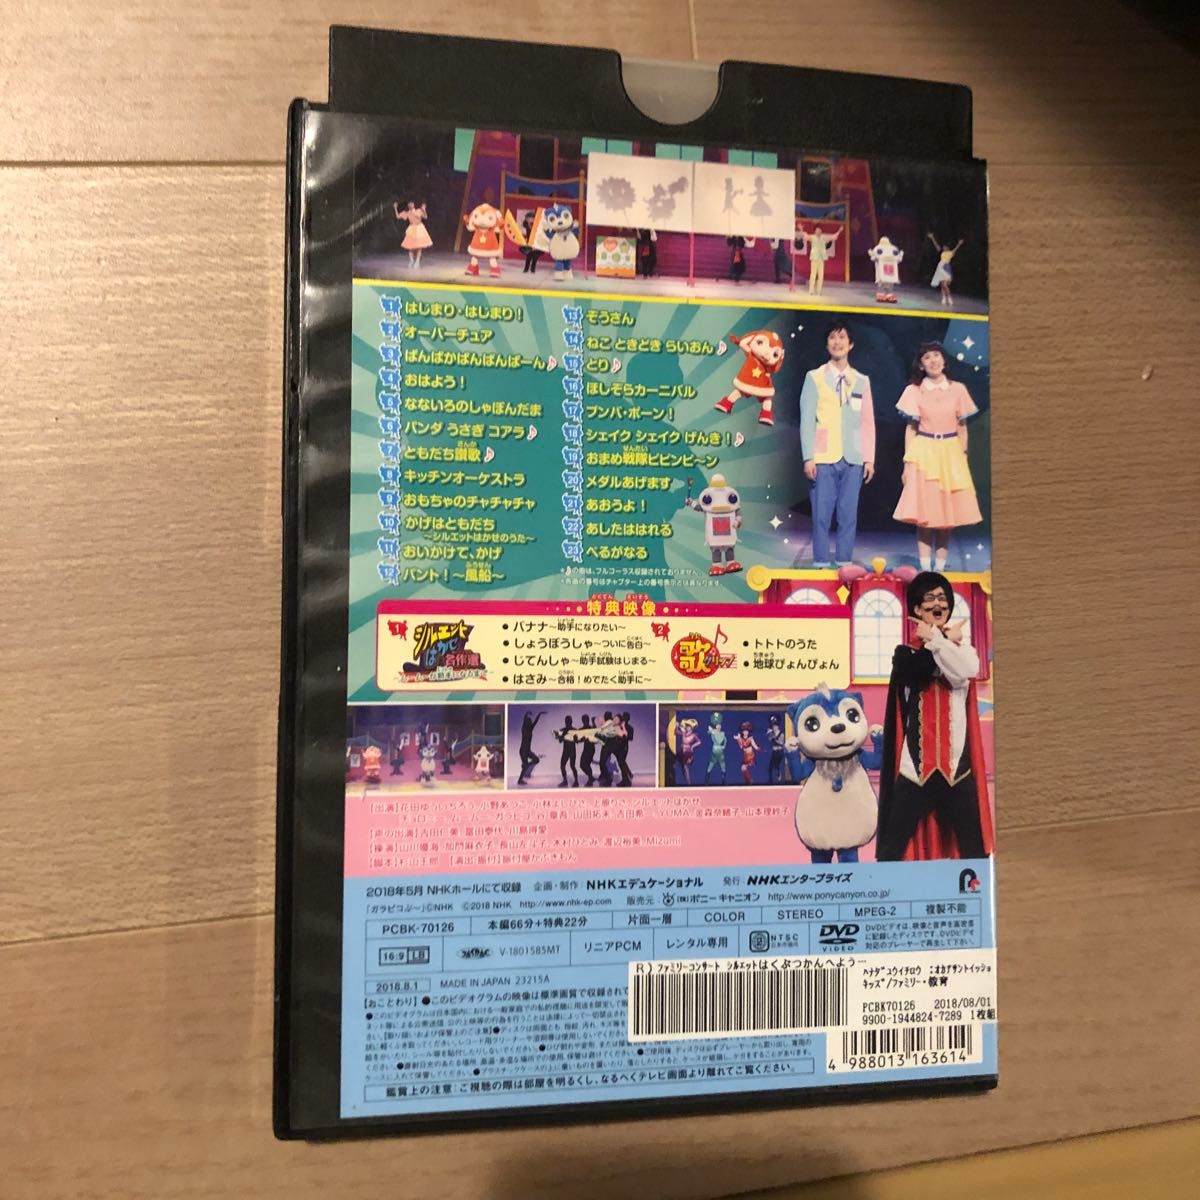 NHKおかあさんといっしょ ファミリーコンサート シルエットはくぶつかんへようこそ! DVD